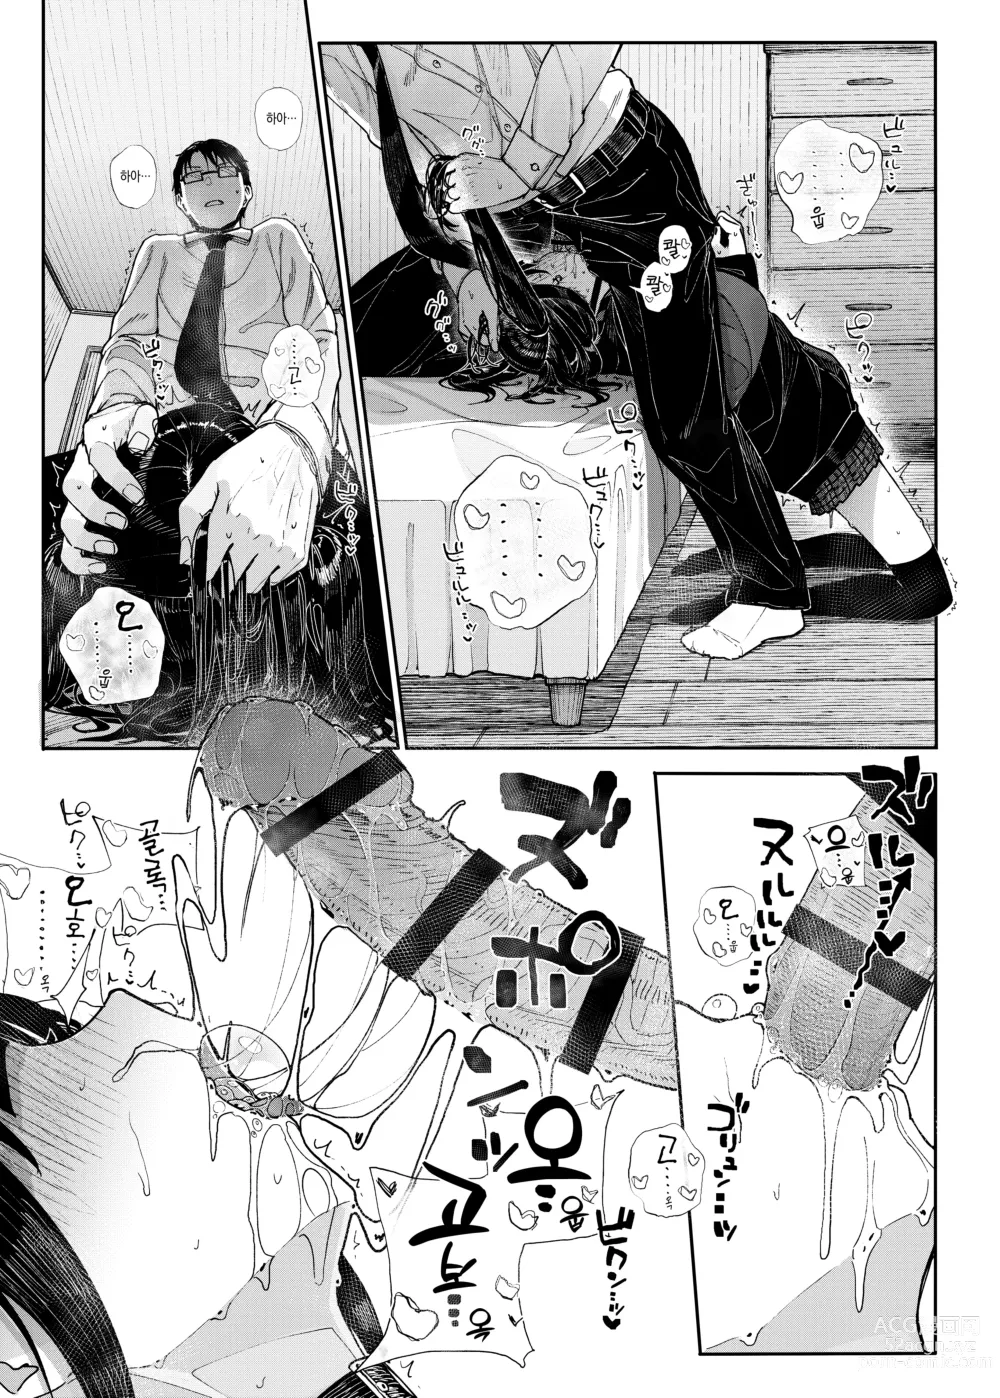 Page 33 of doujinshi 성실하기만 한 내가 파멸을 바라는 학생의 성벽을 망가뜨린 이야기 ~그래서 나는 가정교사를 그만뒀다~